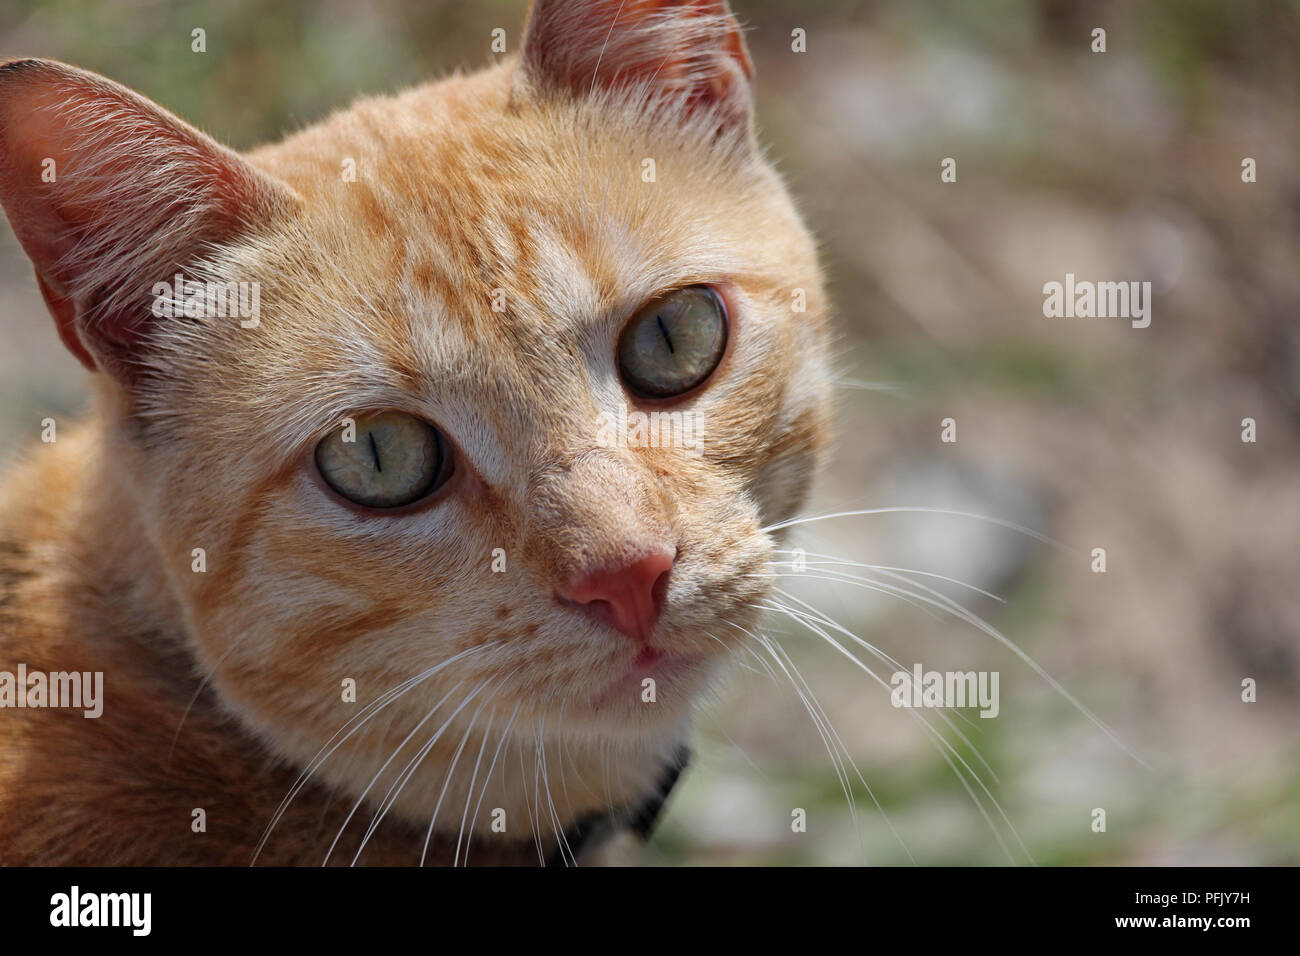 Closeup of orange tabby looking at camera Stock Photo